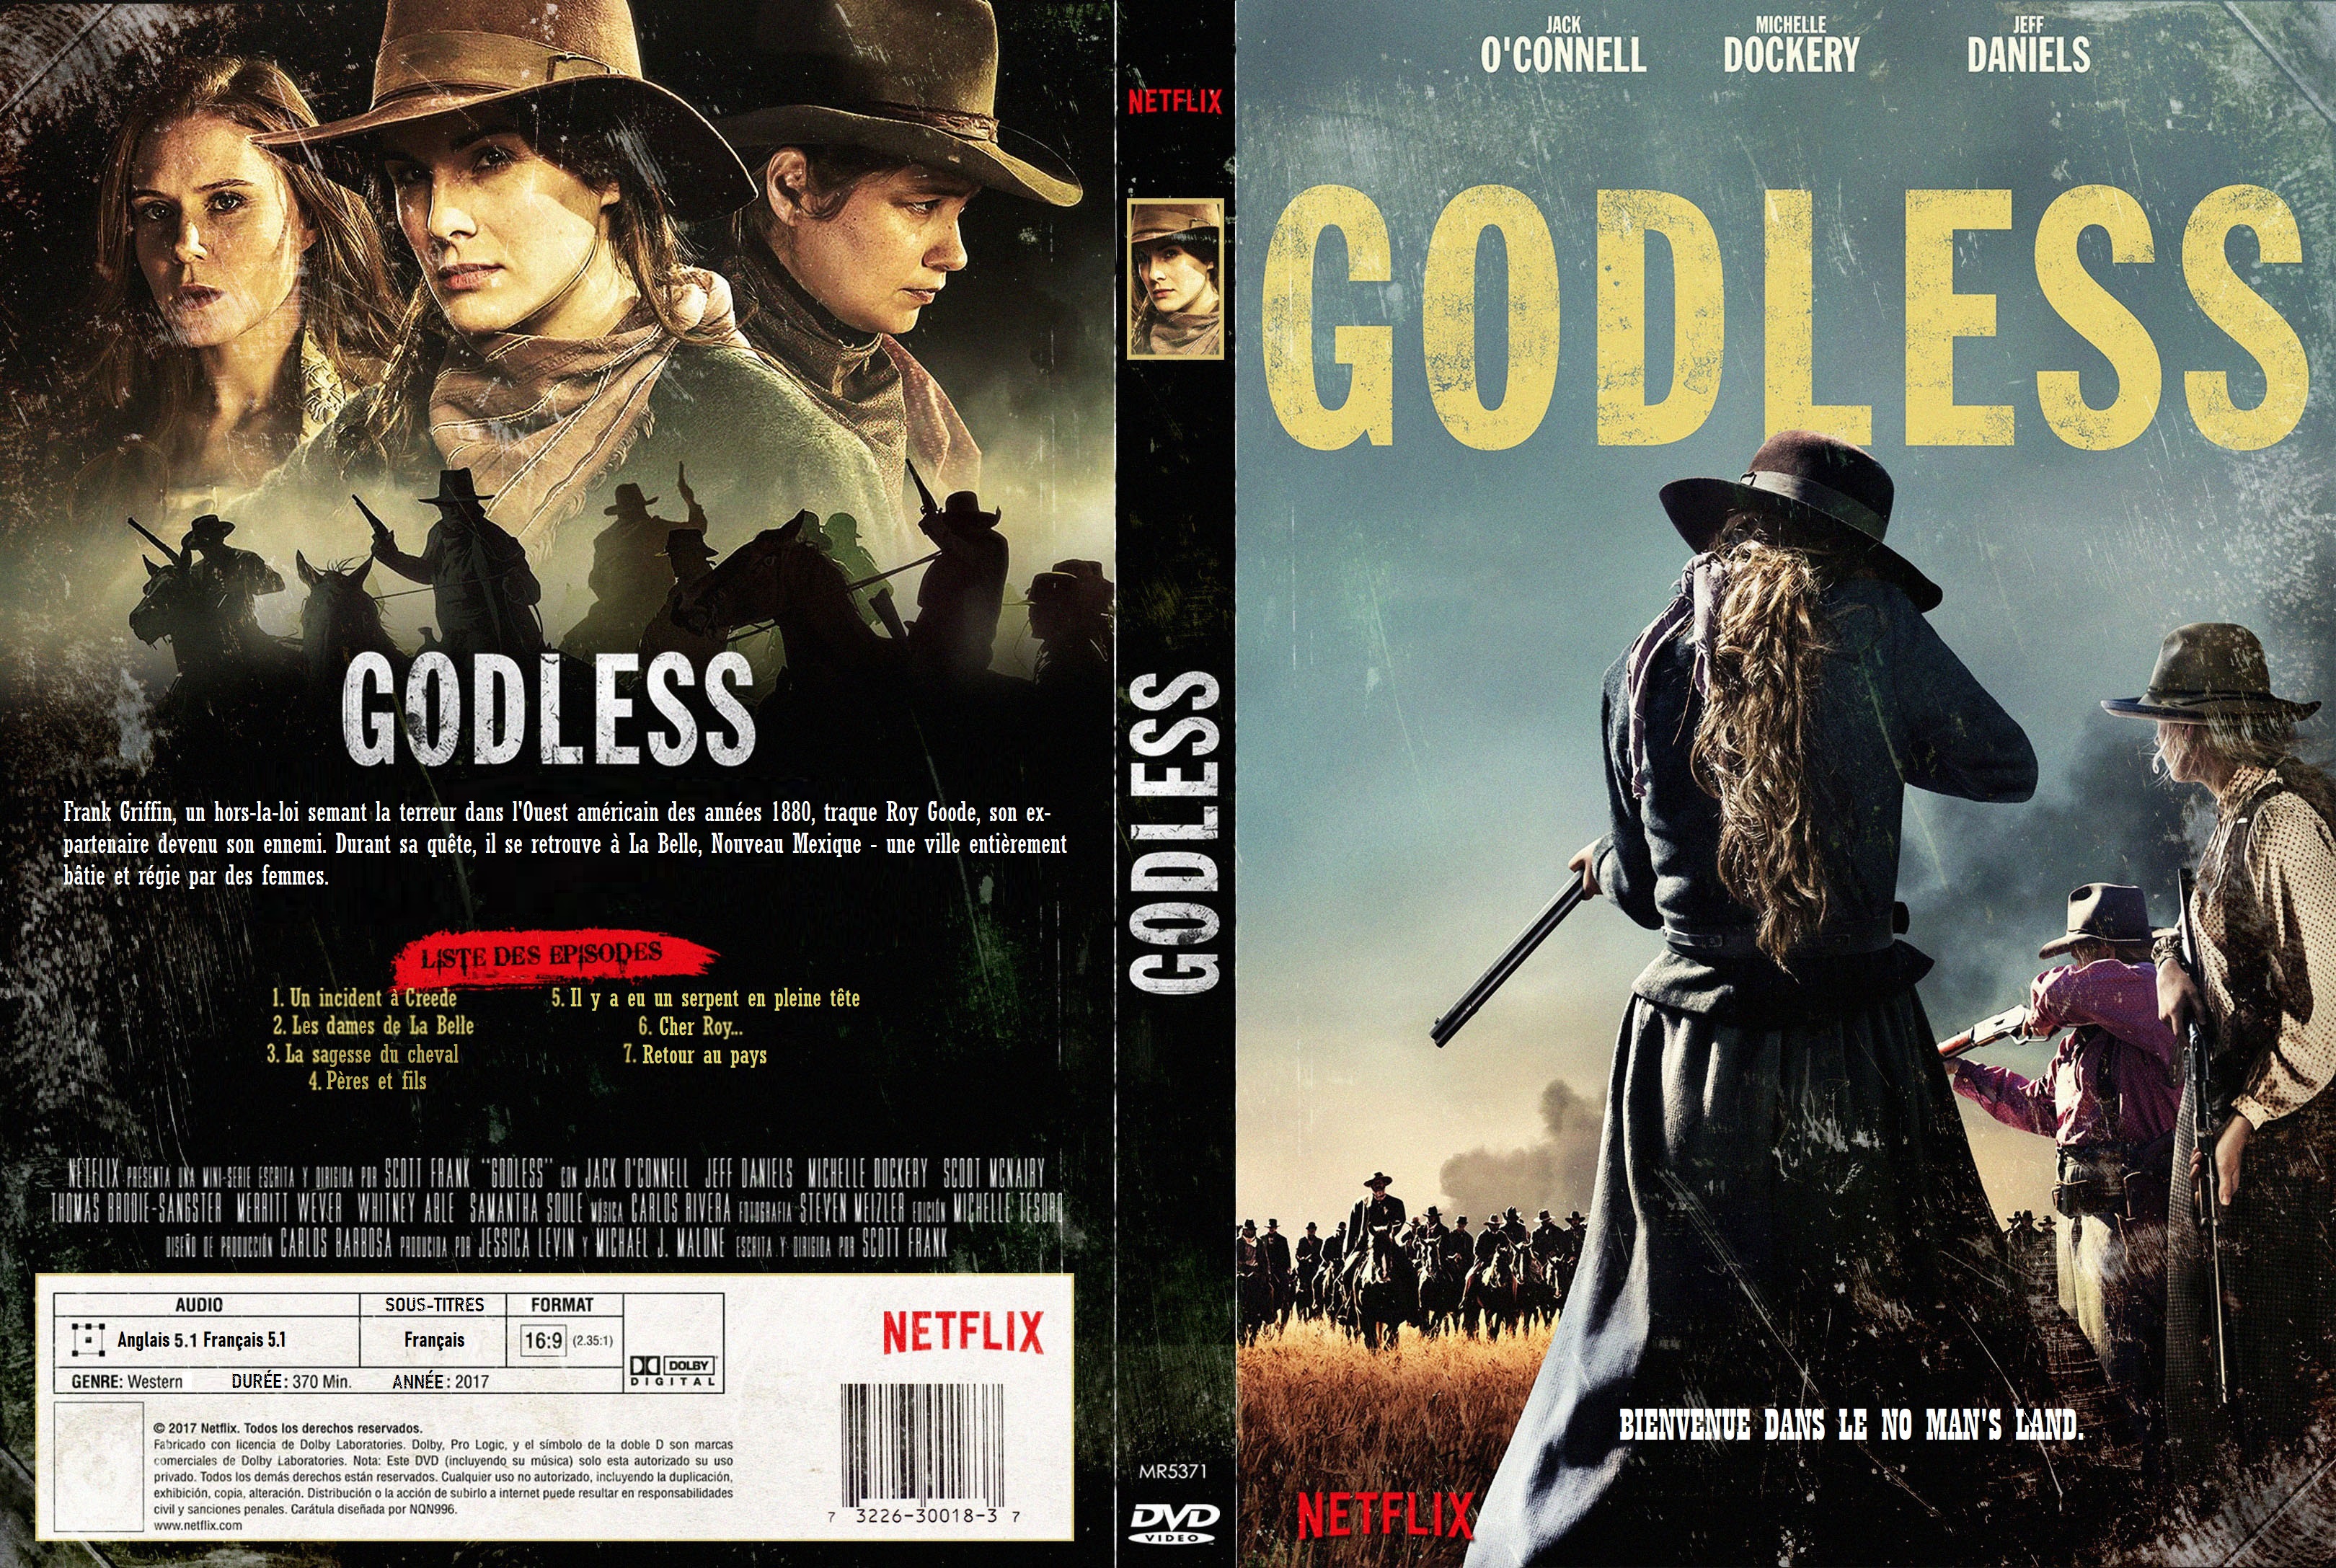 Jaquette DVD Godless saison 1 custom